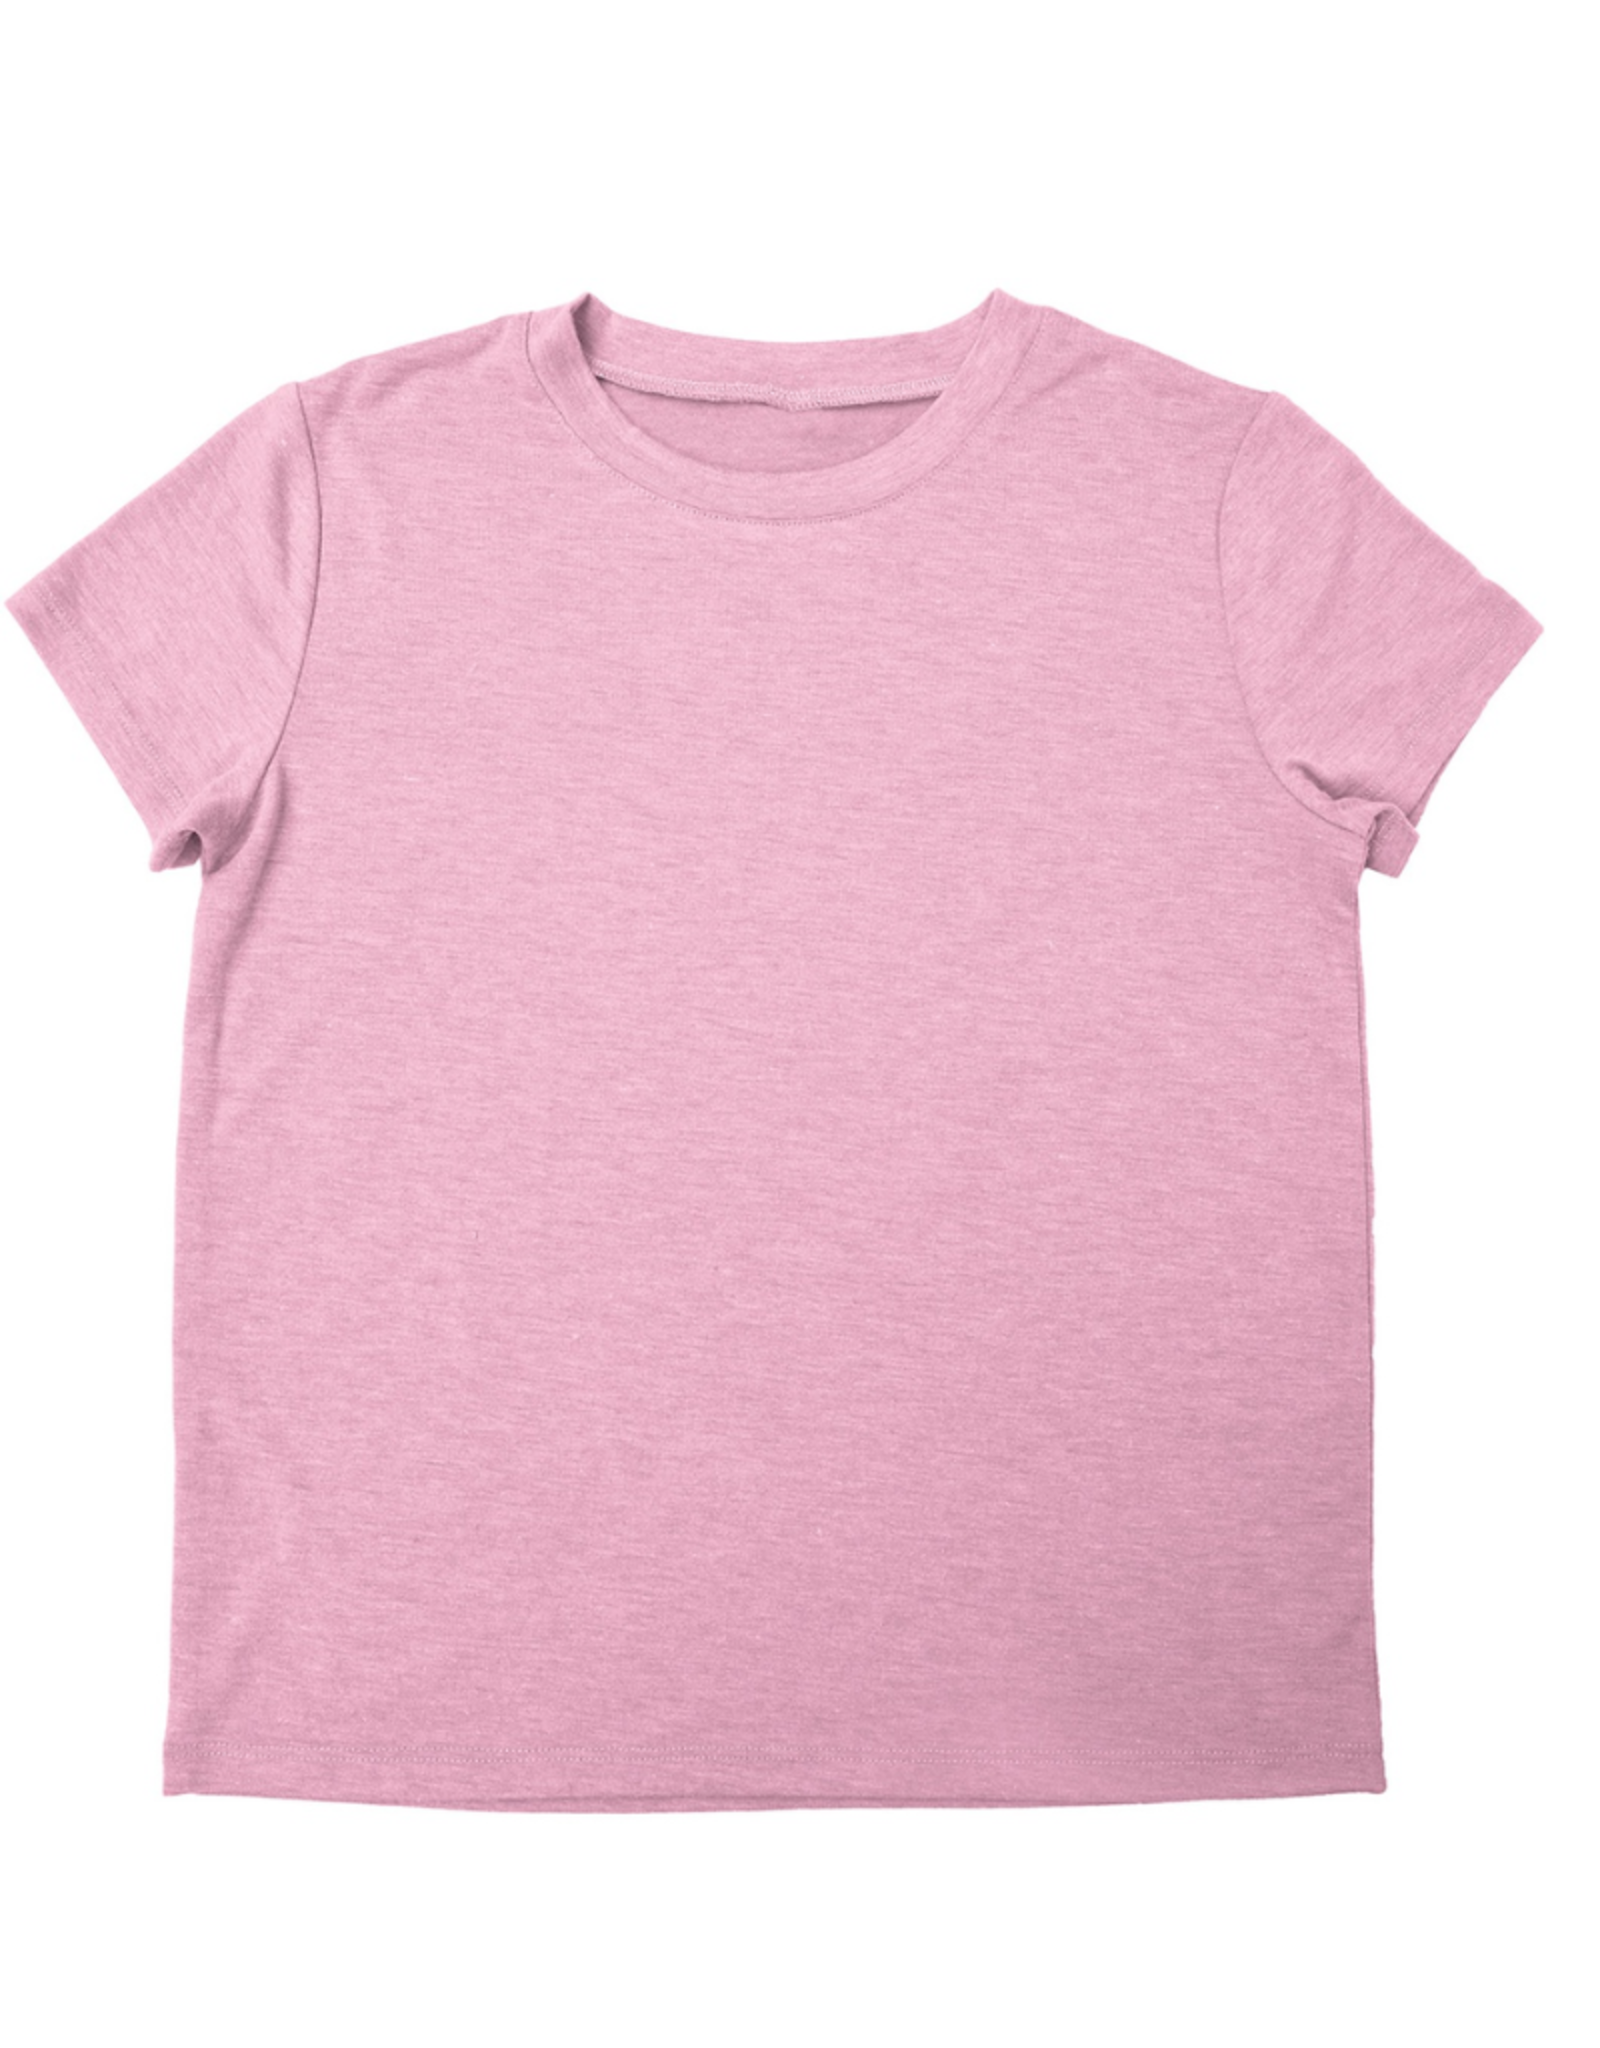 Iscream Pink SS T-Shirt